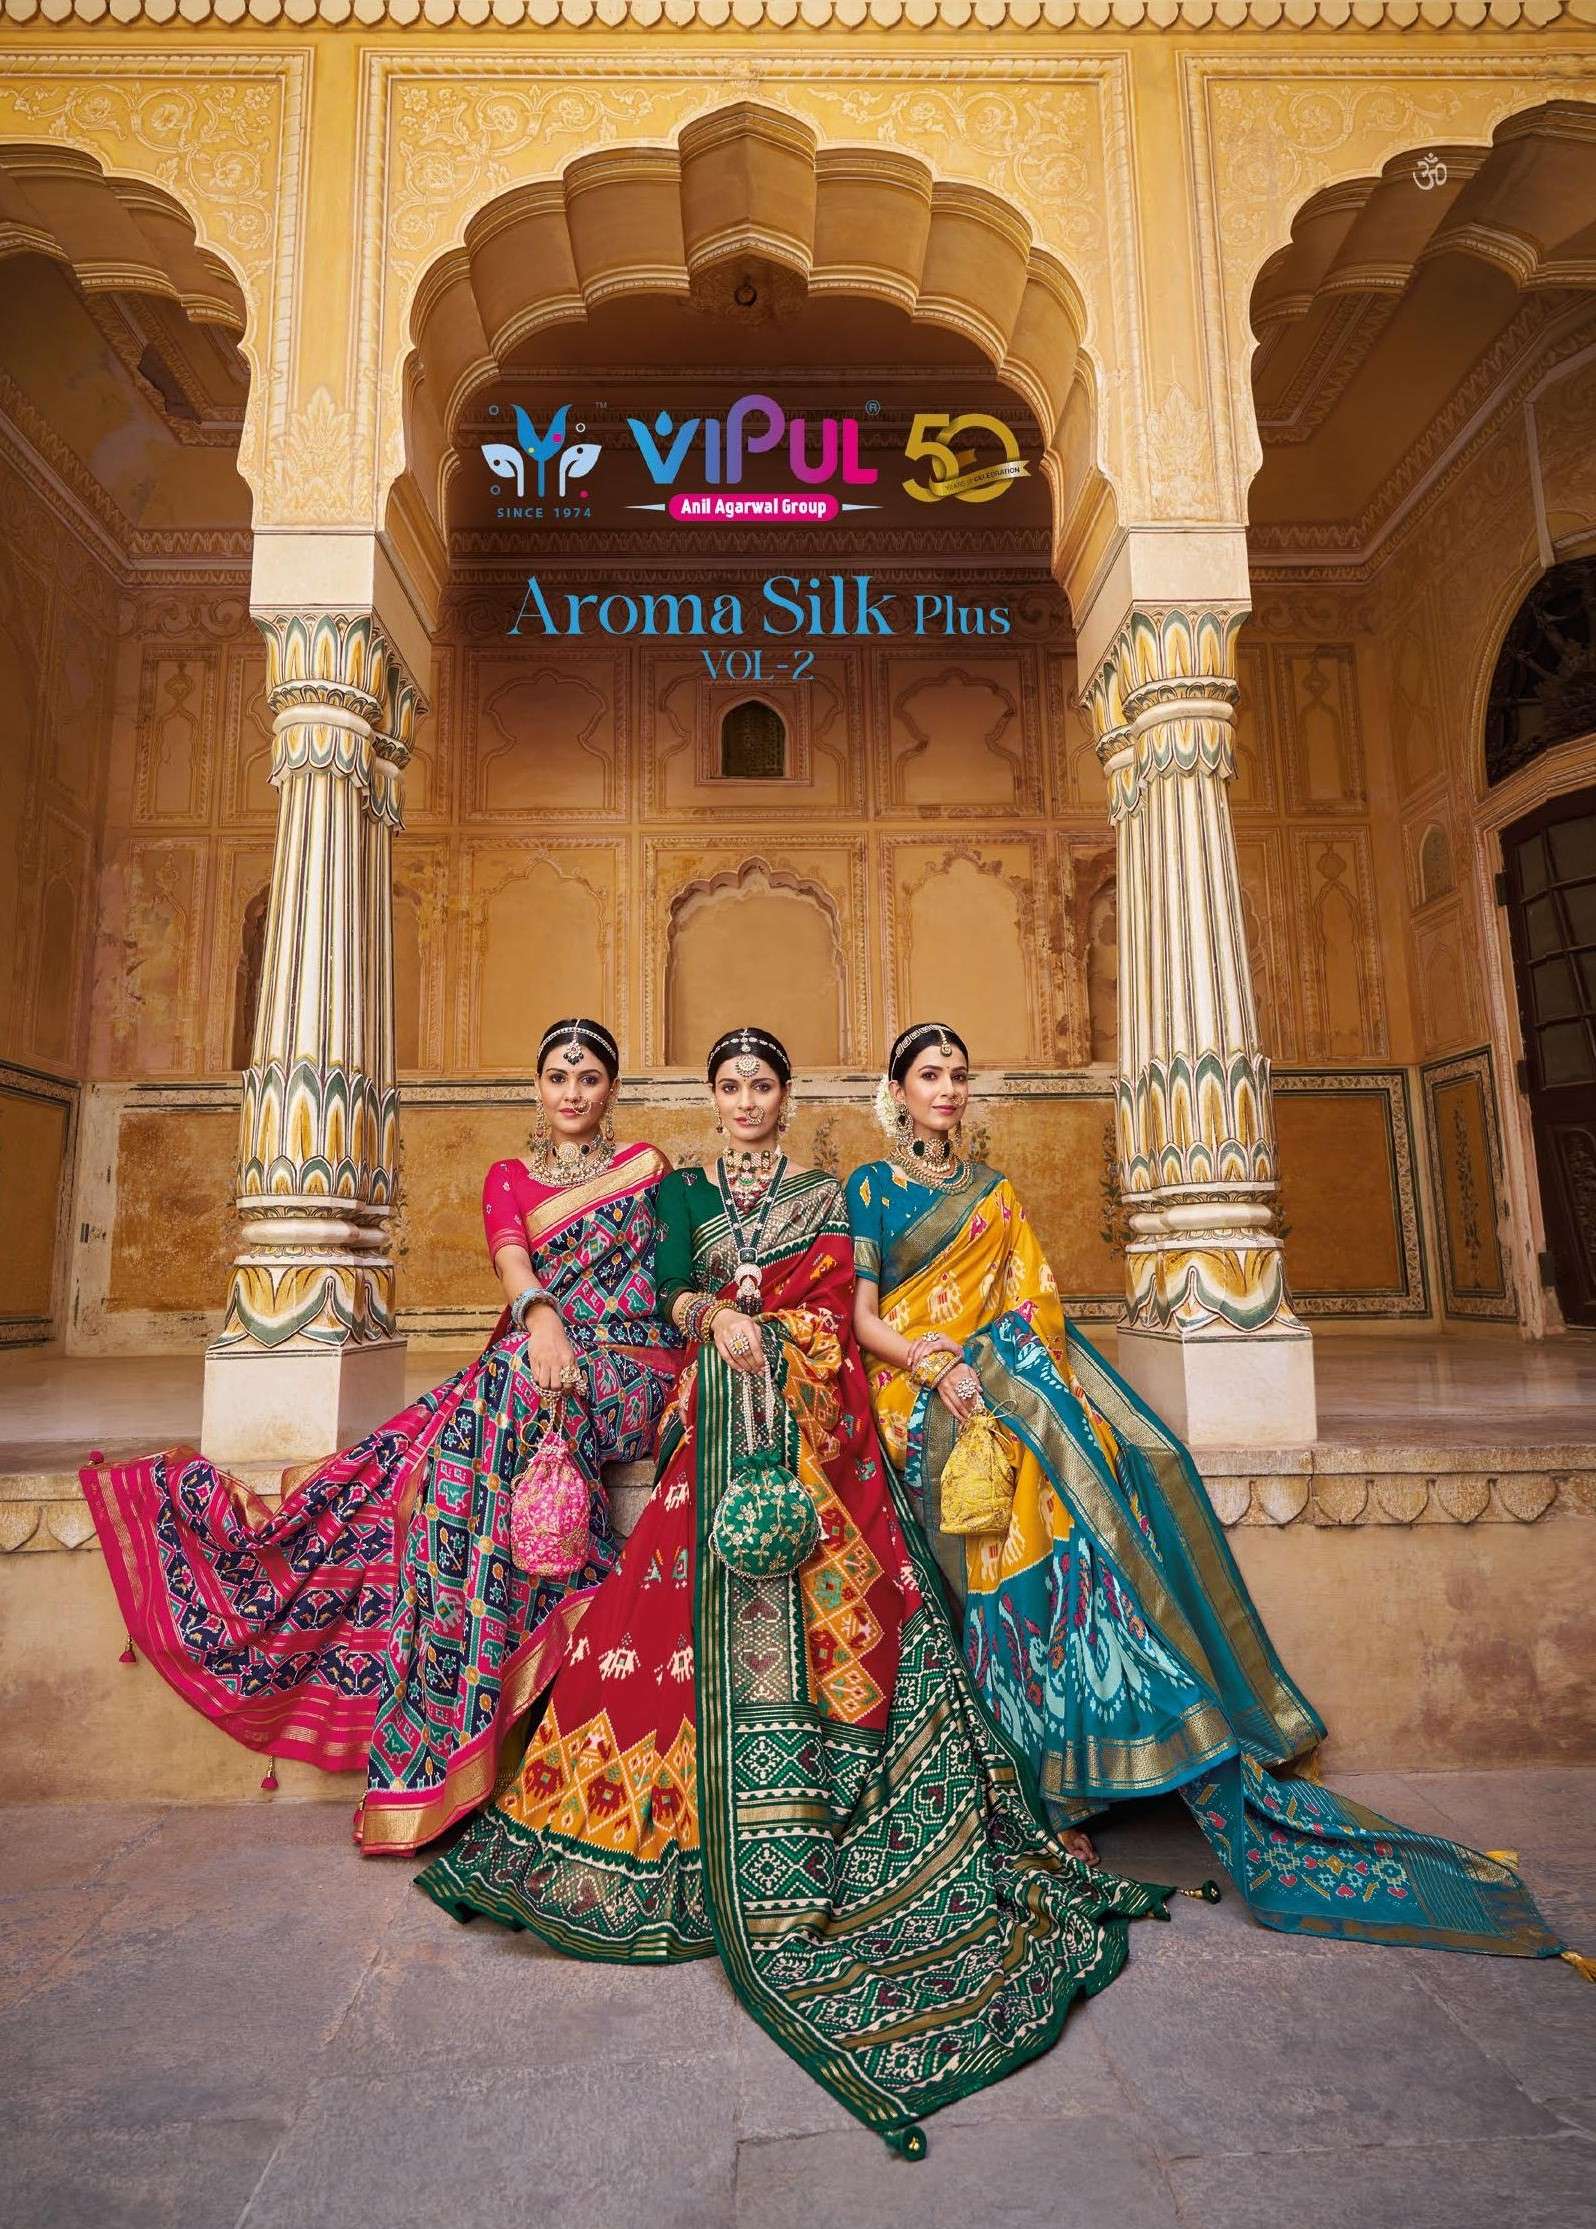 Vipul fashion Aroma Silk Plus Vol 2 Silk with Gujarat specia...